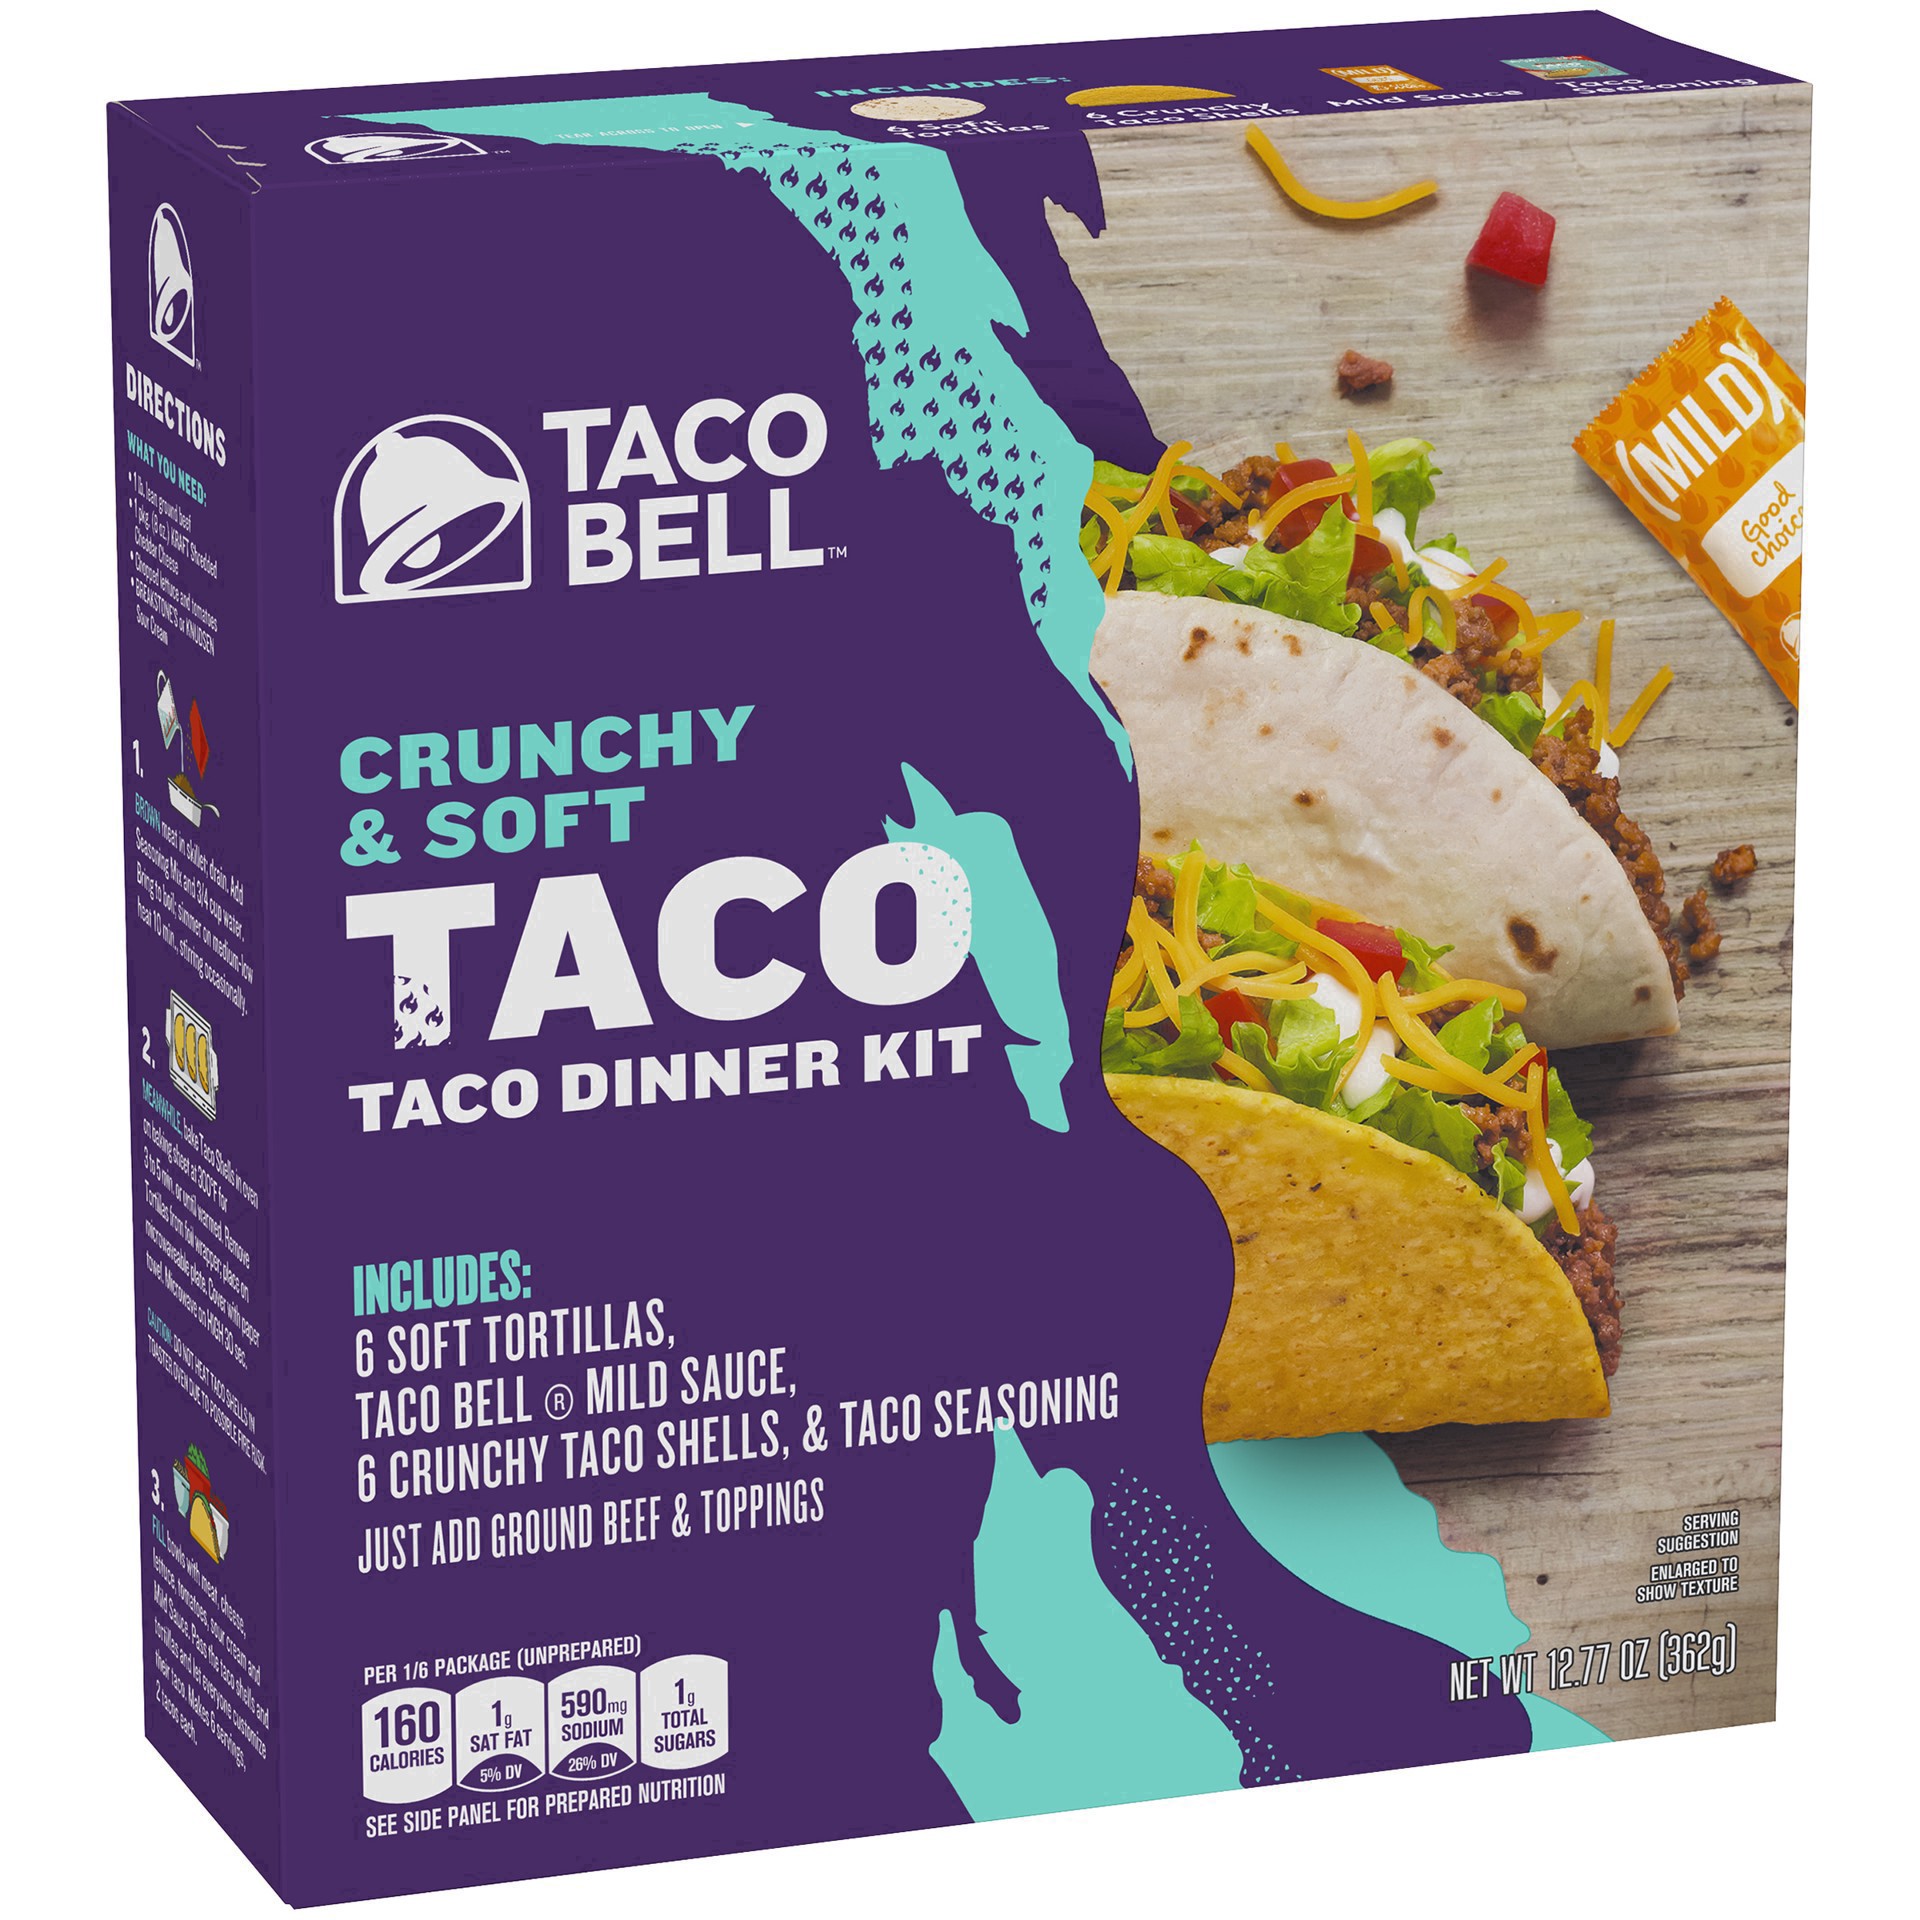 slide 20 of 101, Taco Bell Crunchy & Soft Taco Cravings Kit with 6 Soft Tortillas, 6 Crunchy Taco Shells, Taco Bell Mild Sauce & Seasoning, 12.77 oz Box, 1 ct